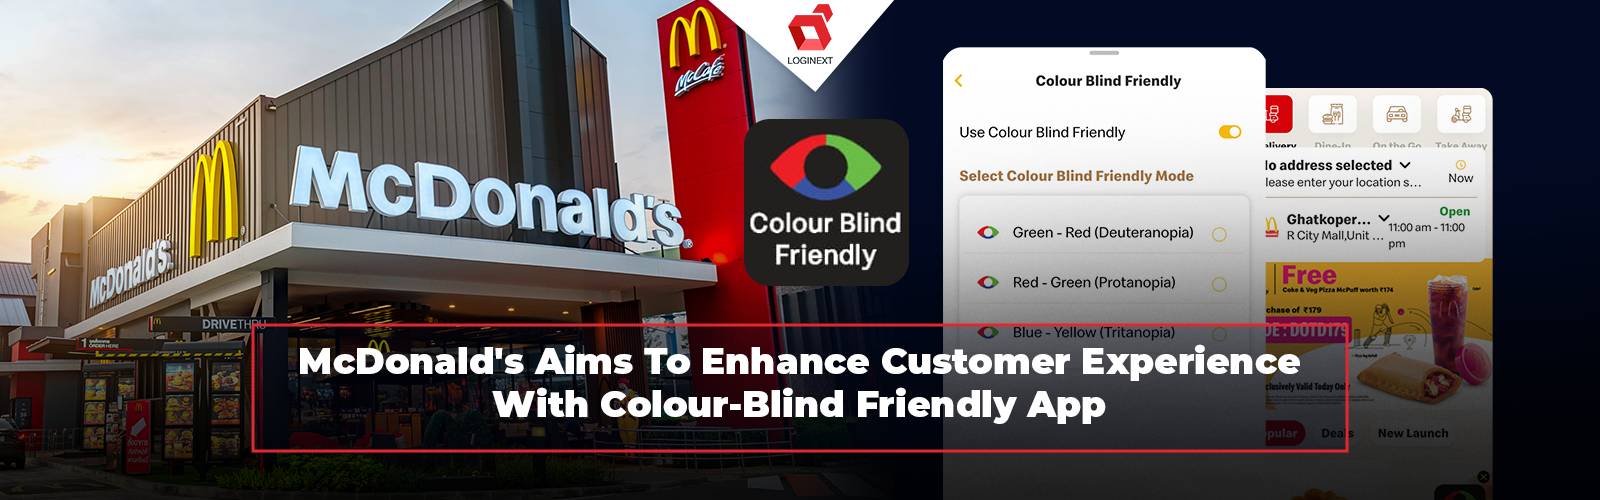 McDonald's Improves Customer Experience Via Color-blind Friendly App